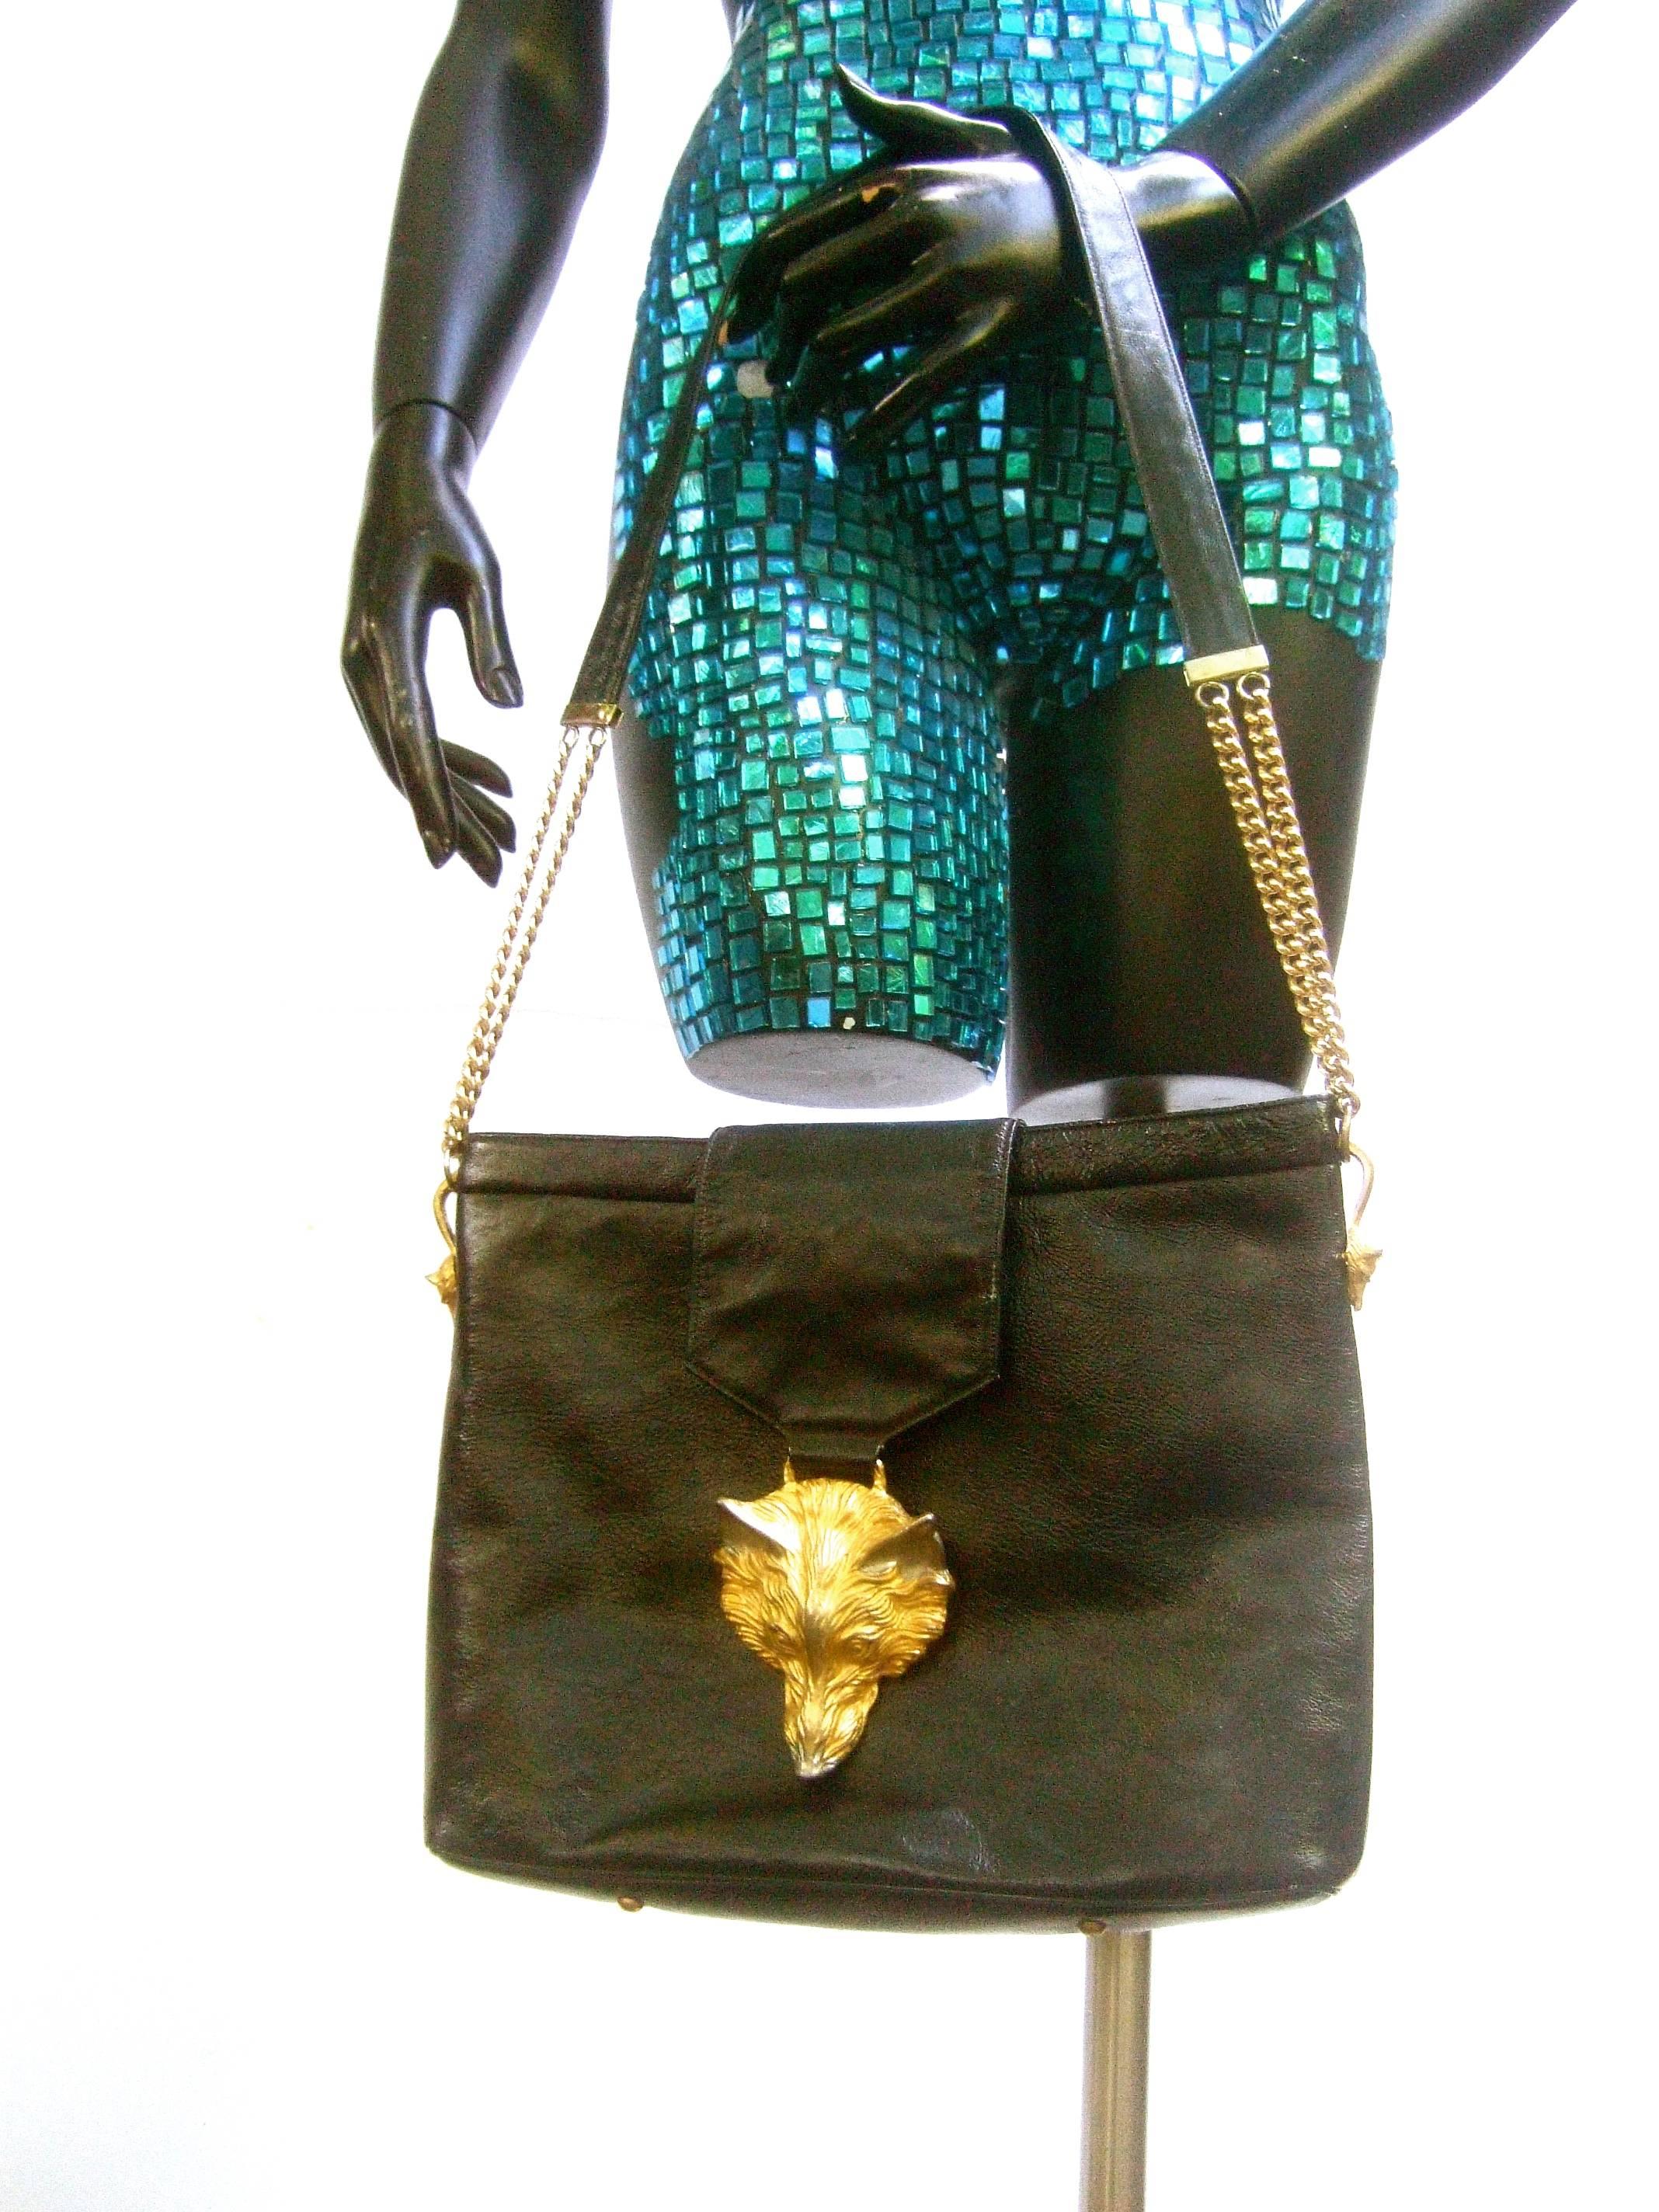 Avant Garde Fox Emblem Black Leather Handbag Designed by Harry Rosenfeld c 1970s 1